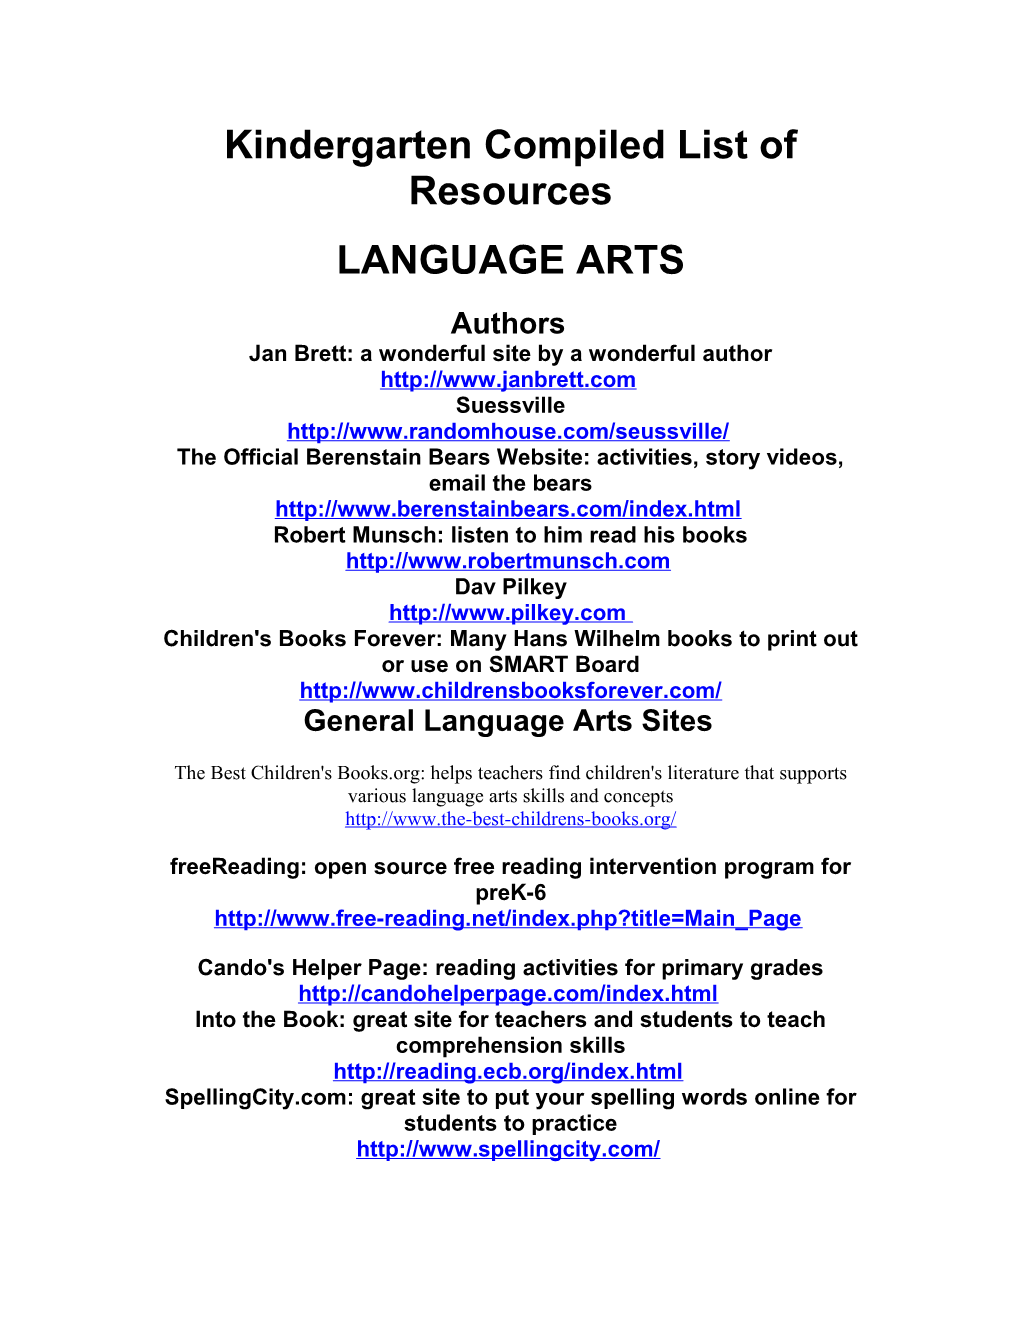 Kindergarten Compiled List of Resources